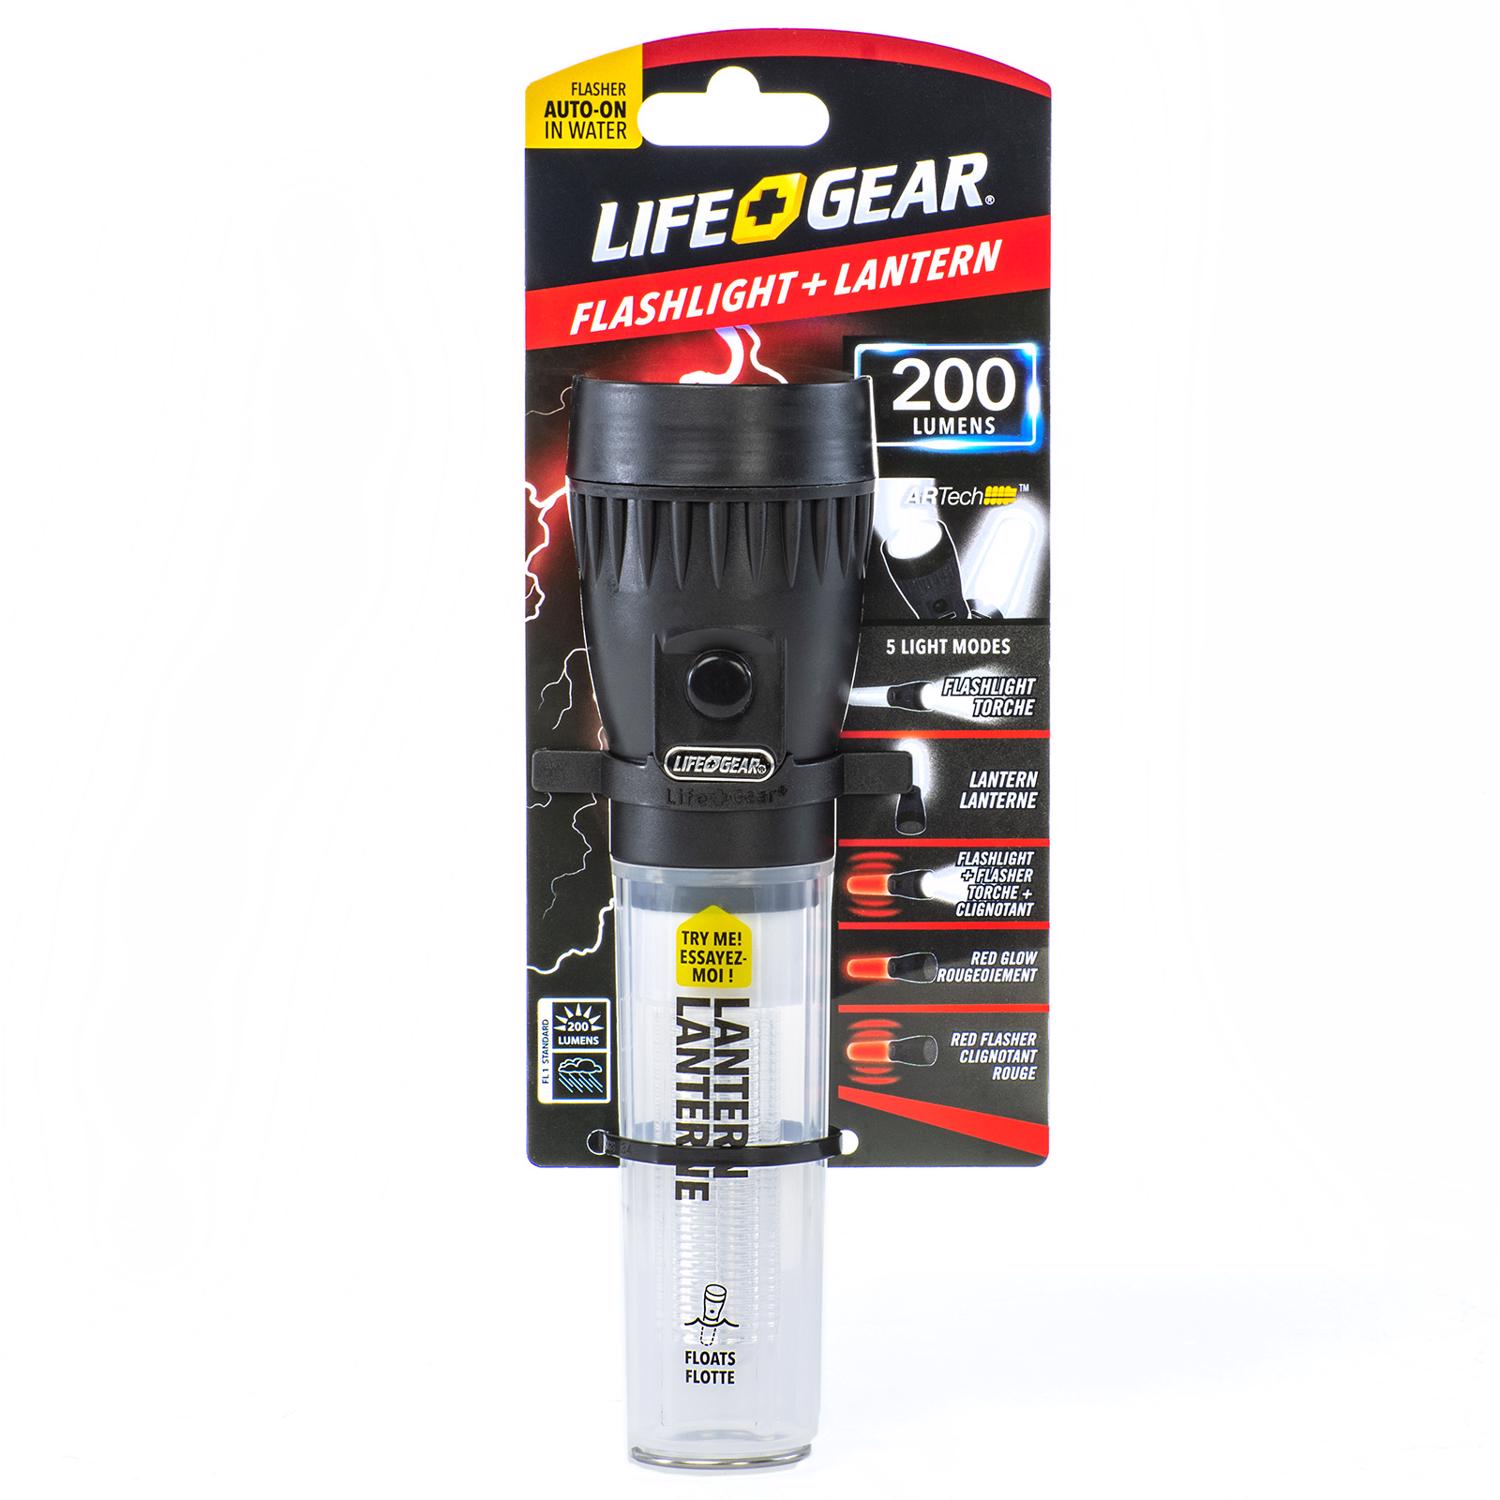 Photos - Torch Life+Gear AR Tech 200 lm Black/White LED Flashlight Lantern AA Battery 41